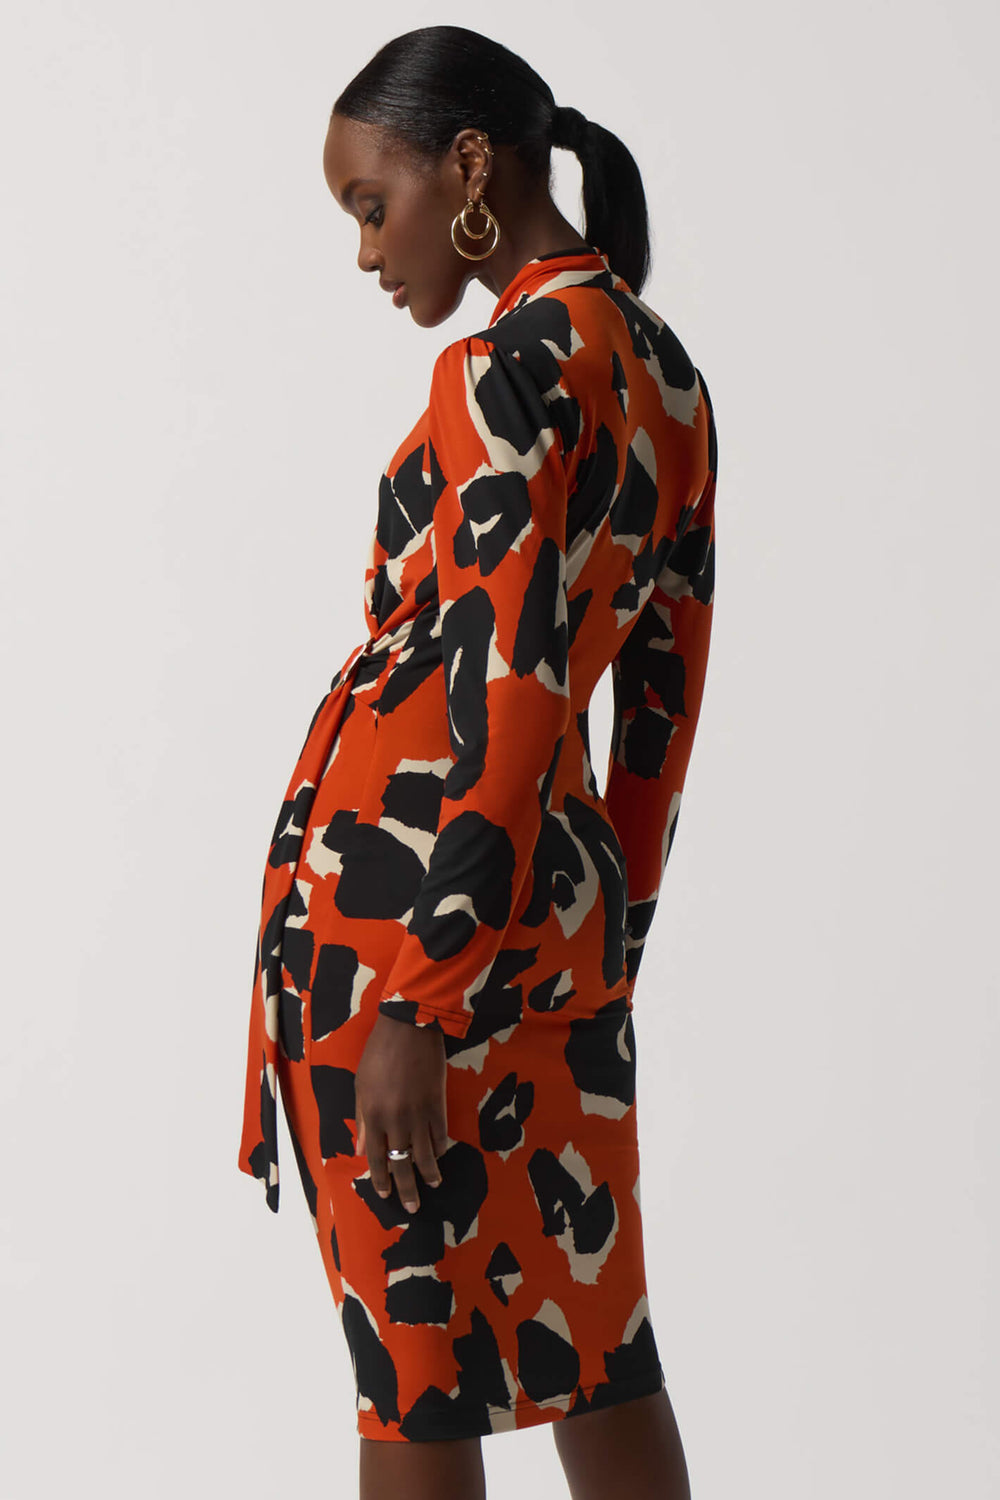 Joseph Ribkoff 233176 Tandoori Orange Print Wrap Style Dress - Experience Boutique